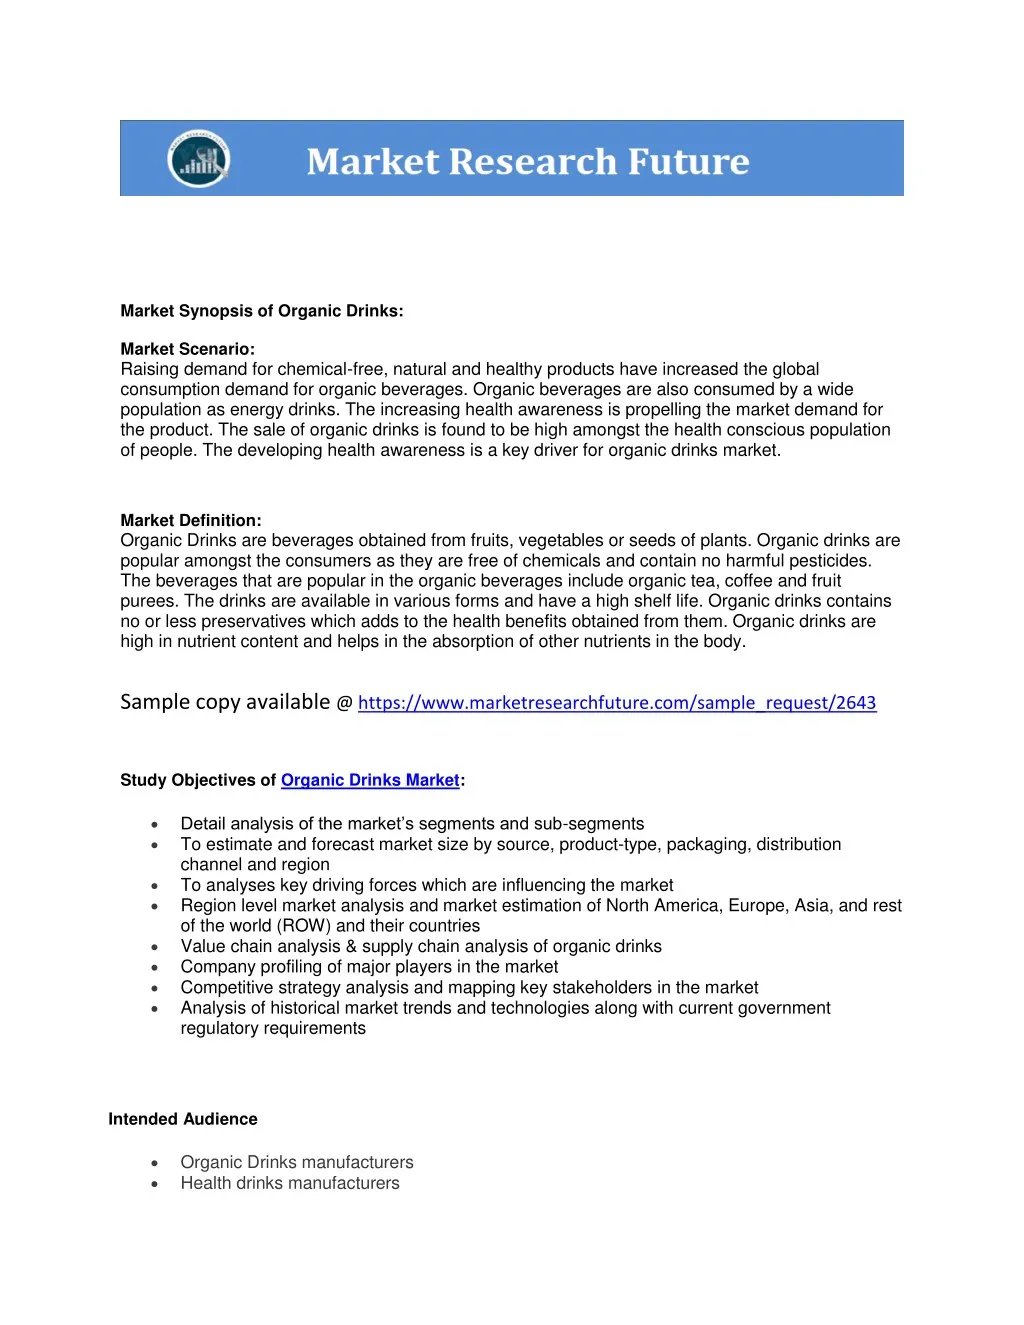 market synopsis of organic drinks market scenario